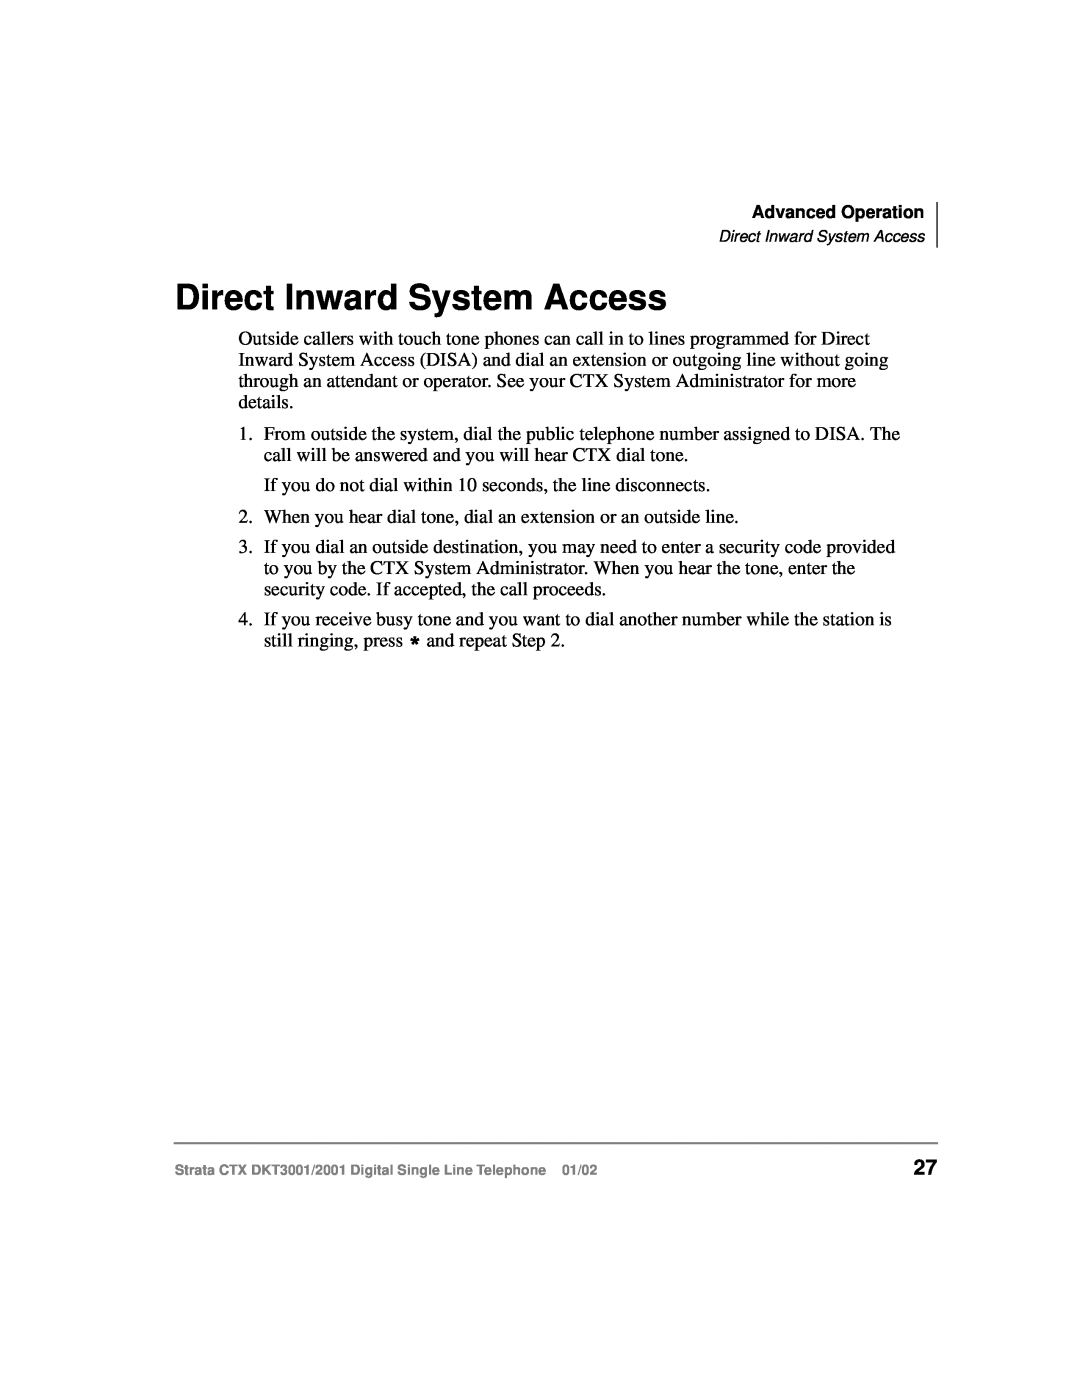 Toshiba 2001, DXT3001 manual Direct Inward System Access 